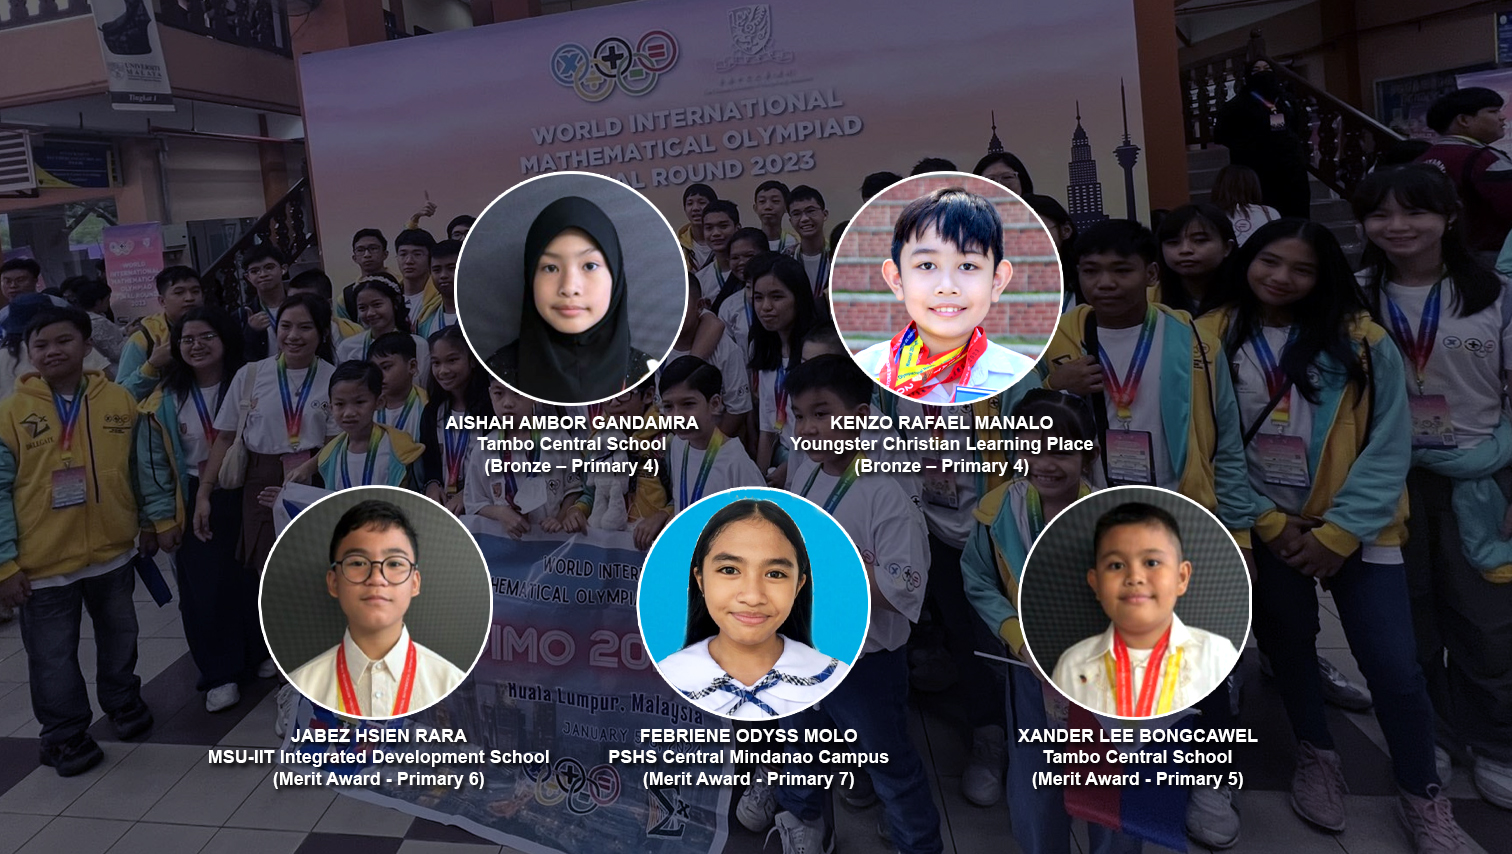 5 students from Iligan shine in World International Mathematical Olympiad 2023 in Malaysia